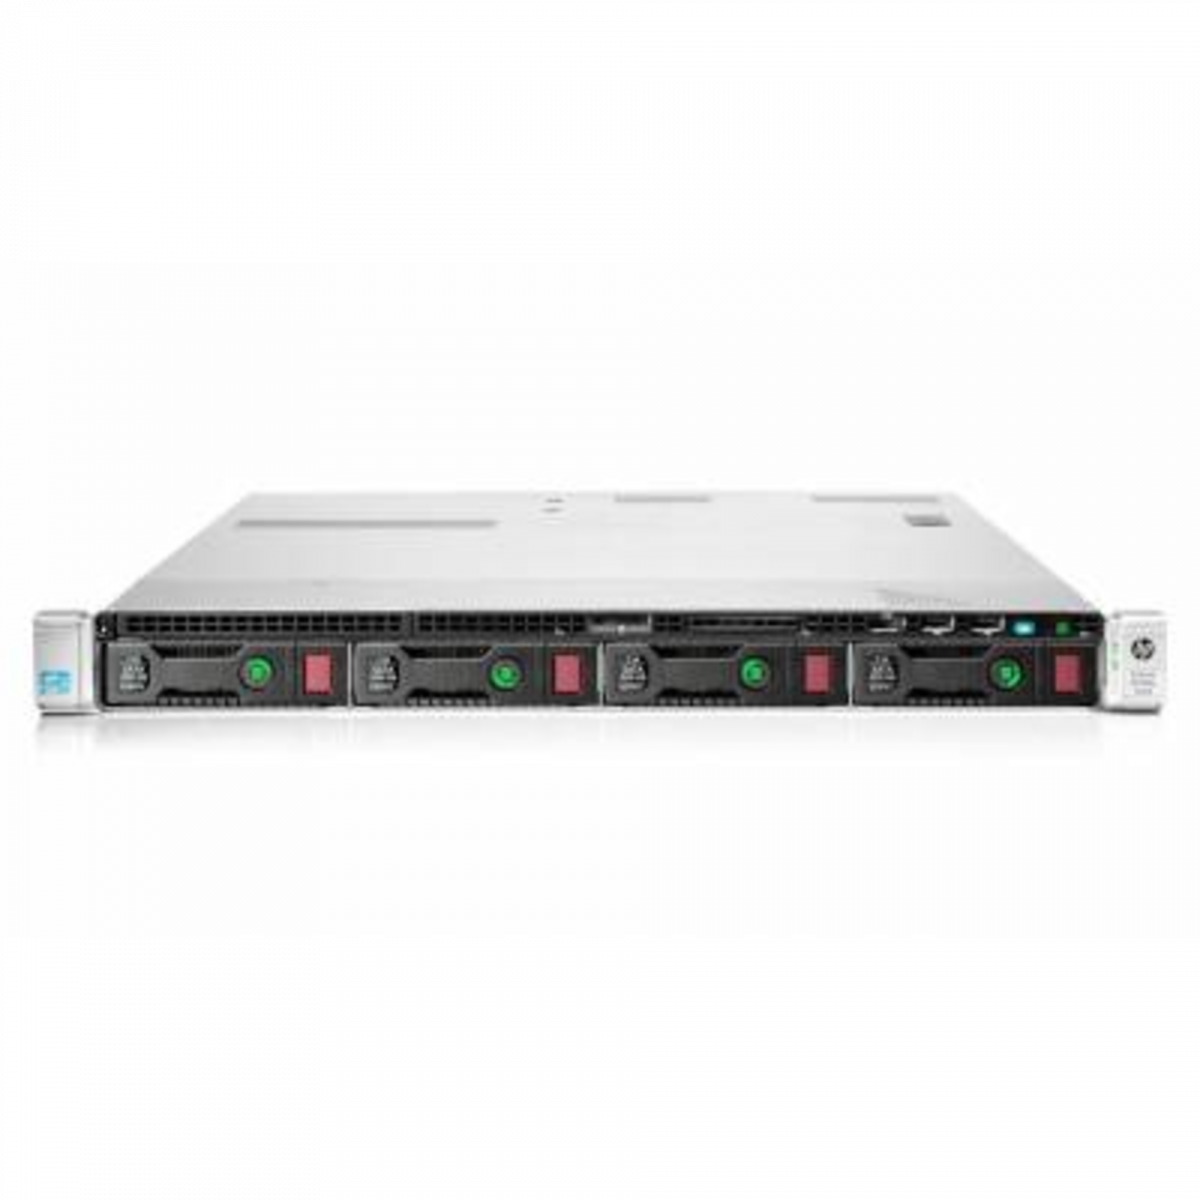 Сервер HP Proliant DL360p Gen8, процессор Intel Xeon 10C E5-2680v2 2.80GHz, 16GB DRAM, 4LFF, P420i/1GB FBWC